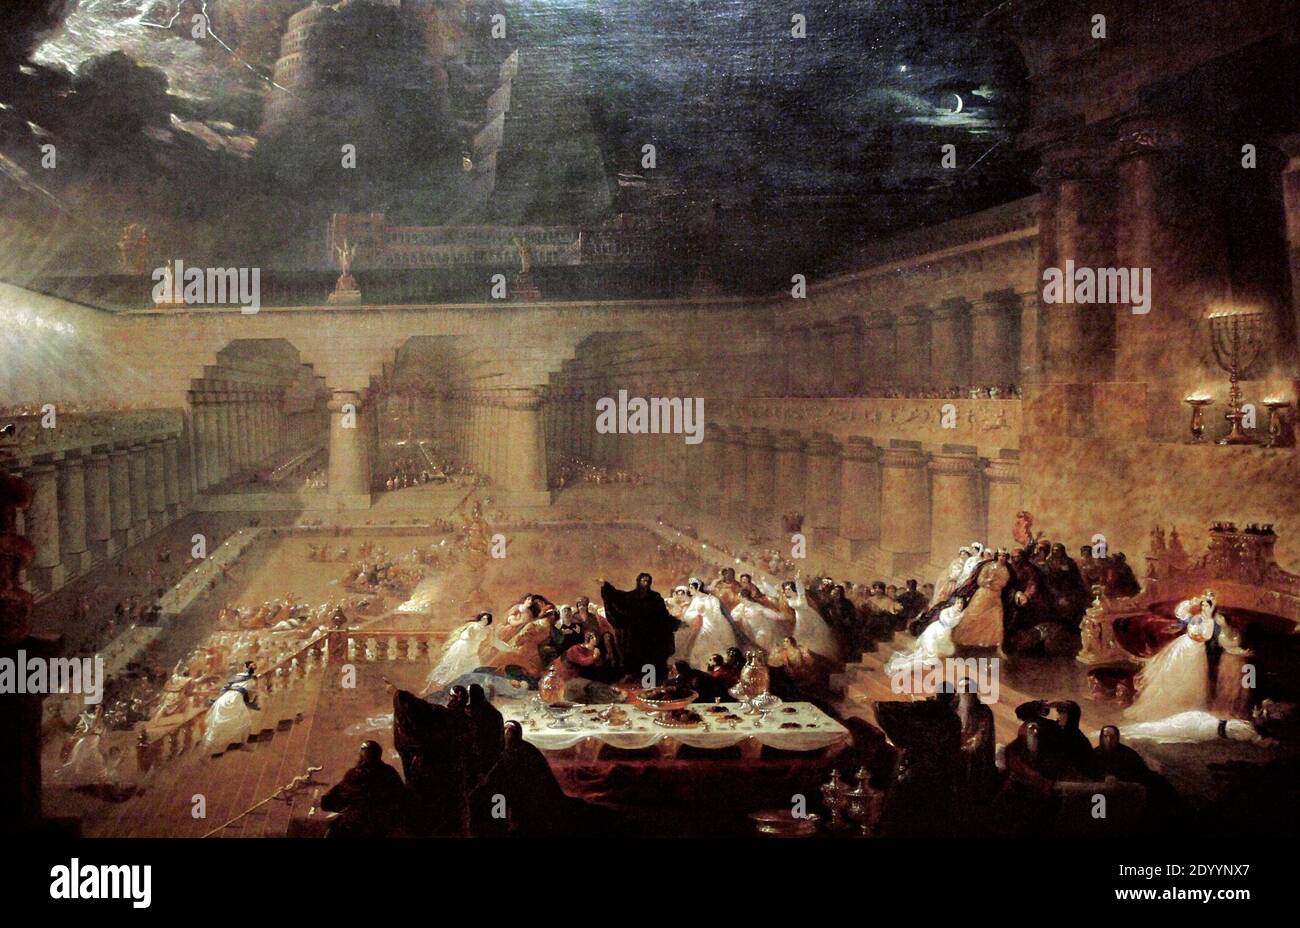 John Martin (1789-1854). Englischer romantischer Maler. Belshazzar's Feast, um 1820. Biblische Episode, das Buch Daniel. Öl auf Leinwand (80 x 120,7 cm). Details. Yale Center for British Art, New Haven, Connecticut, USA. Stockfoto